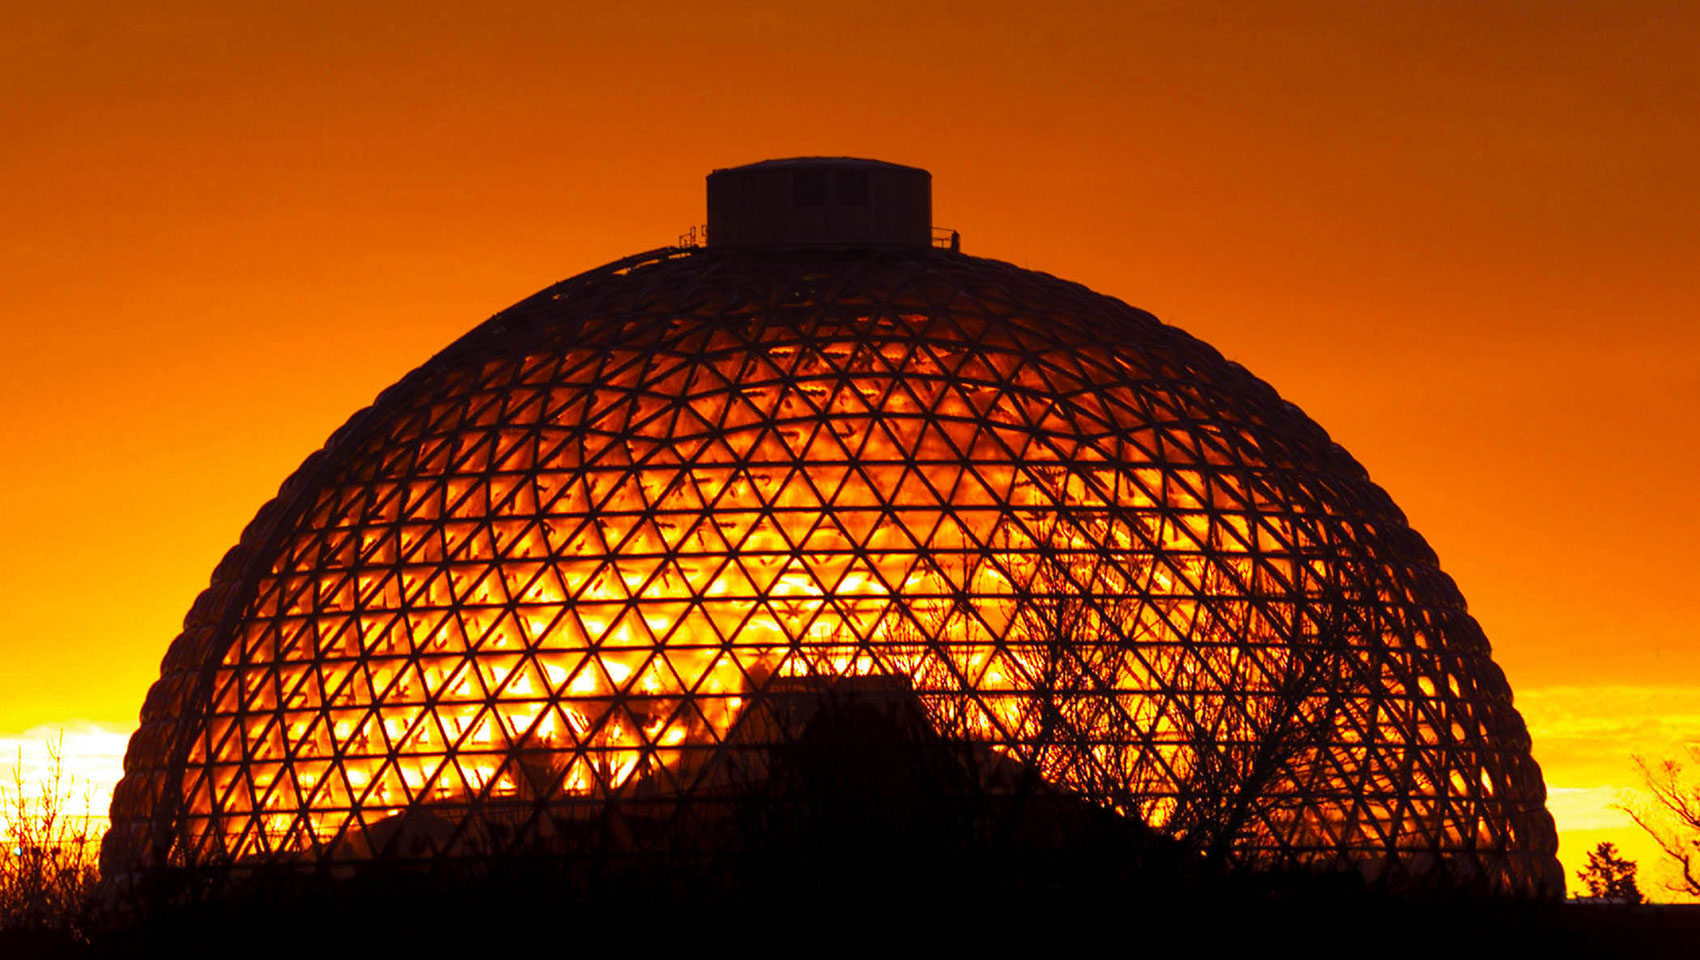 omaha zoo dome glowing orange from the sun